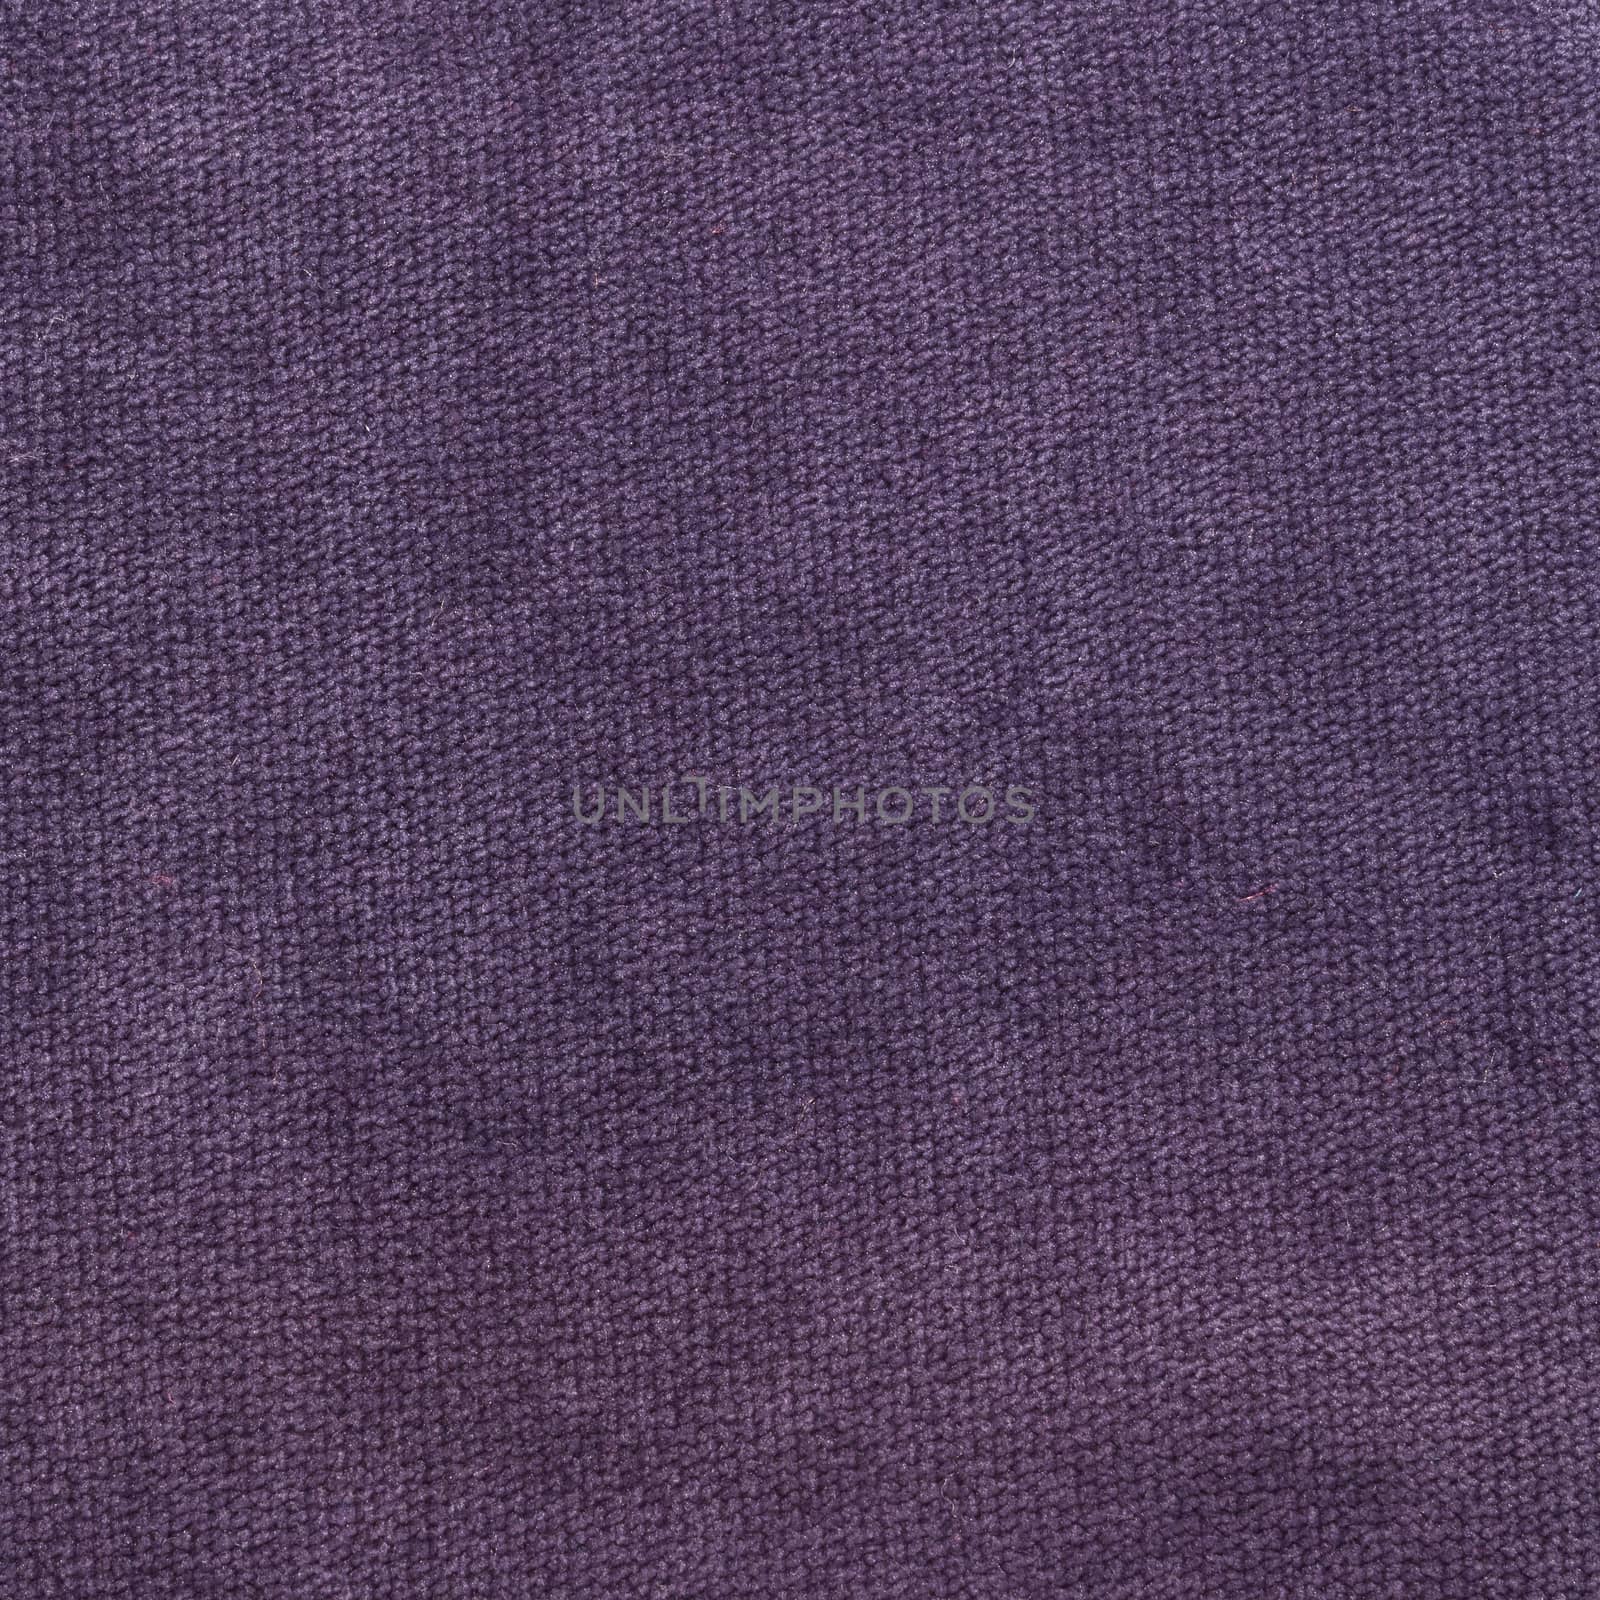 The Velvet fabric texture in purple color. Shape square